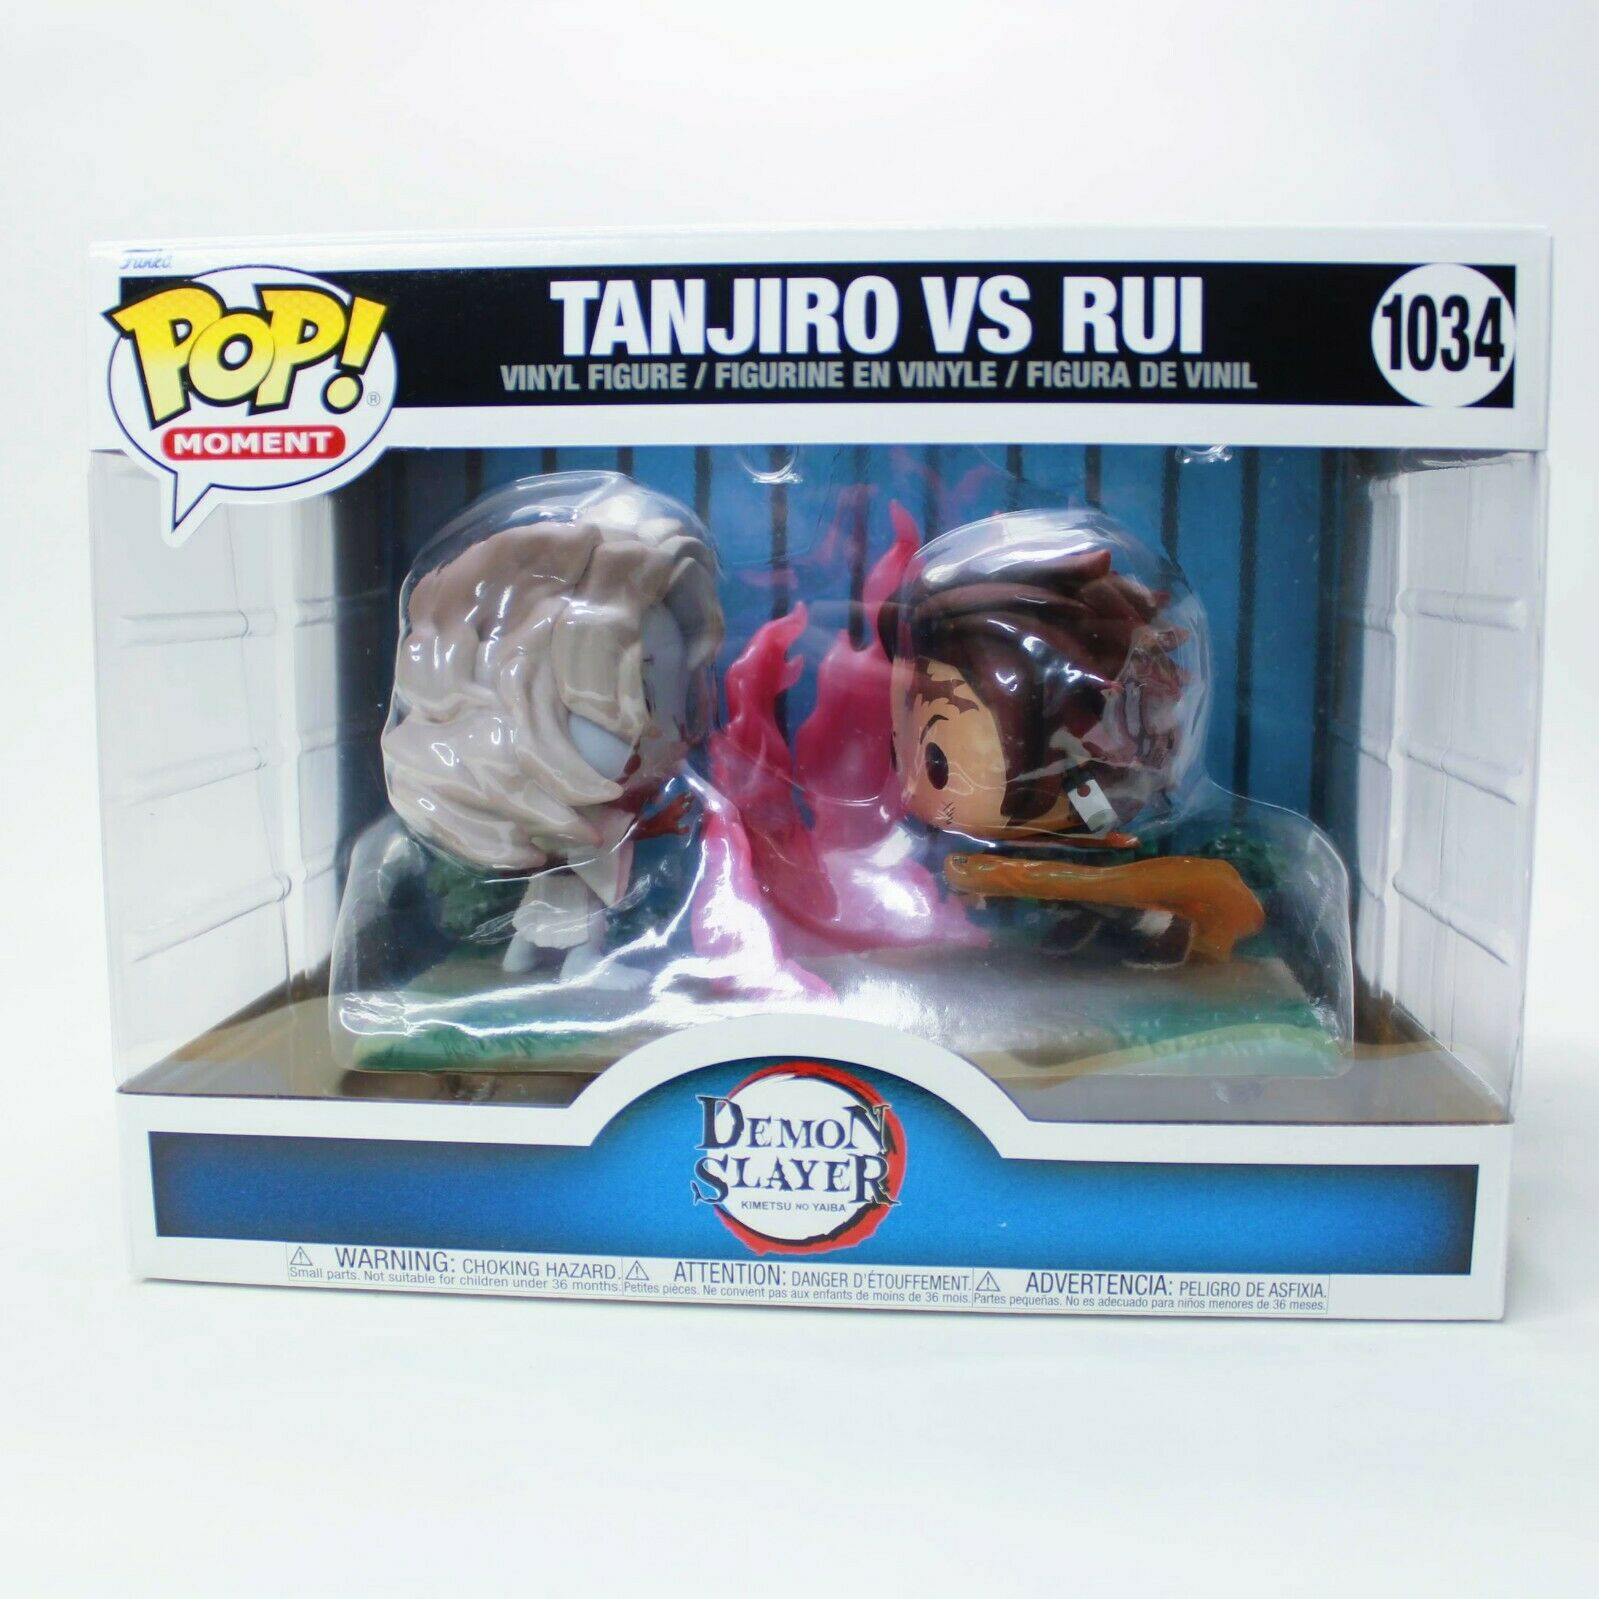 Tanjiro vs Rui (Pop! Moment) Vinyl Figure 1034, Demon Slayer Funko Pop!